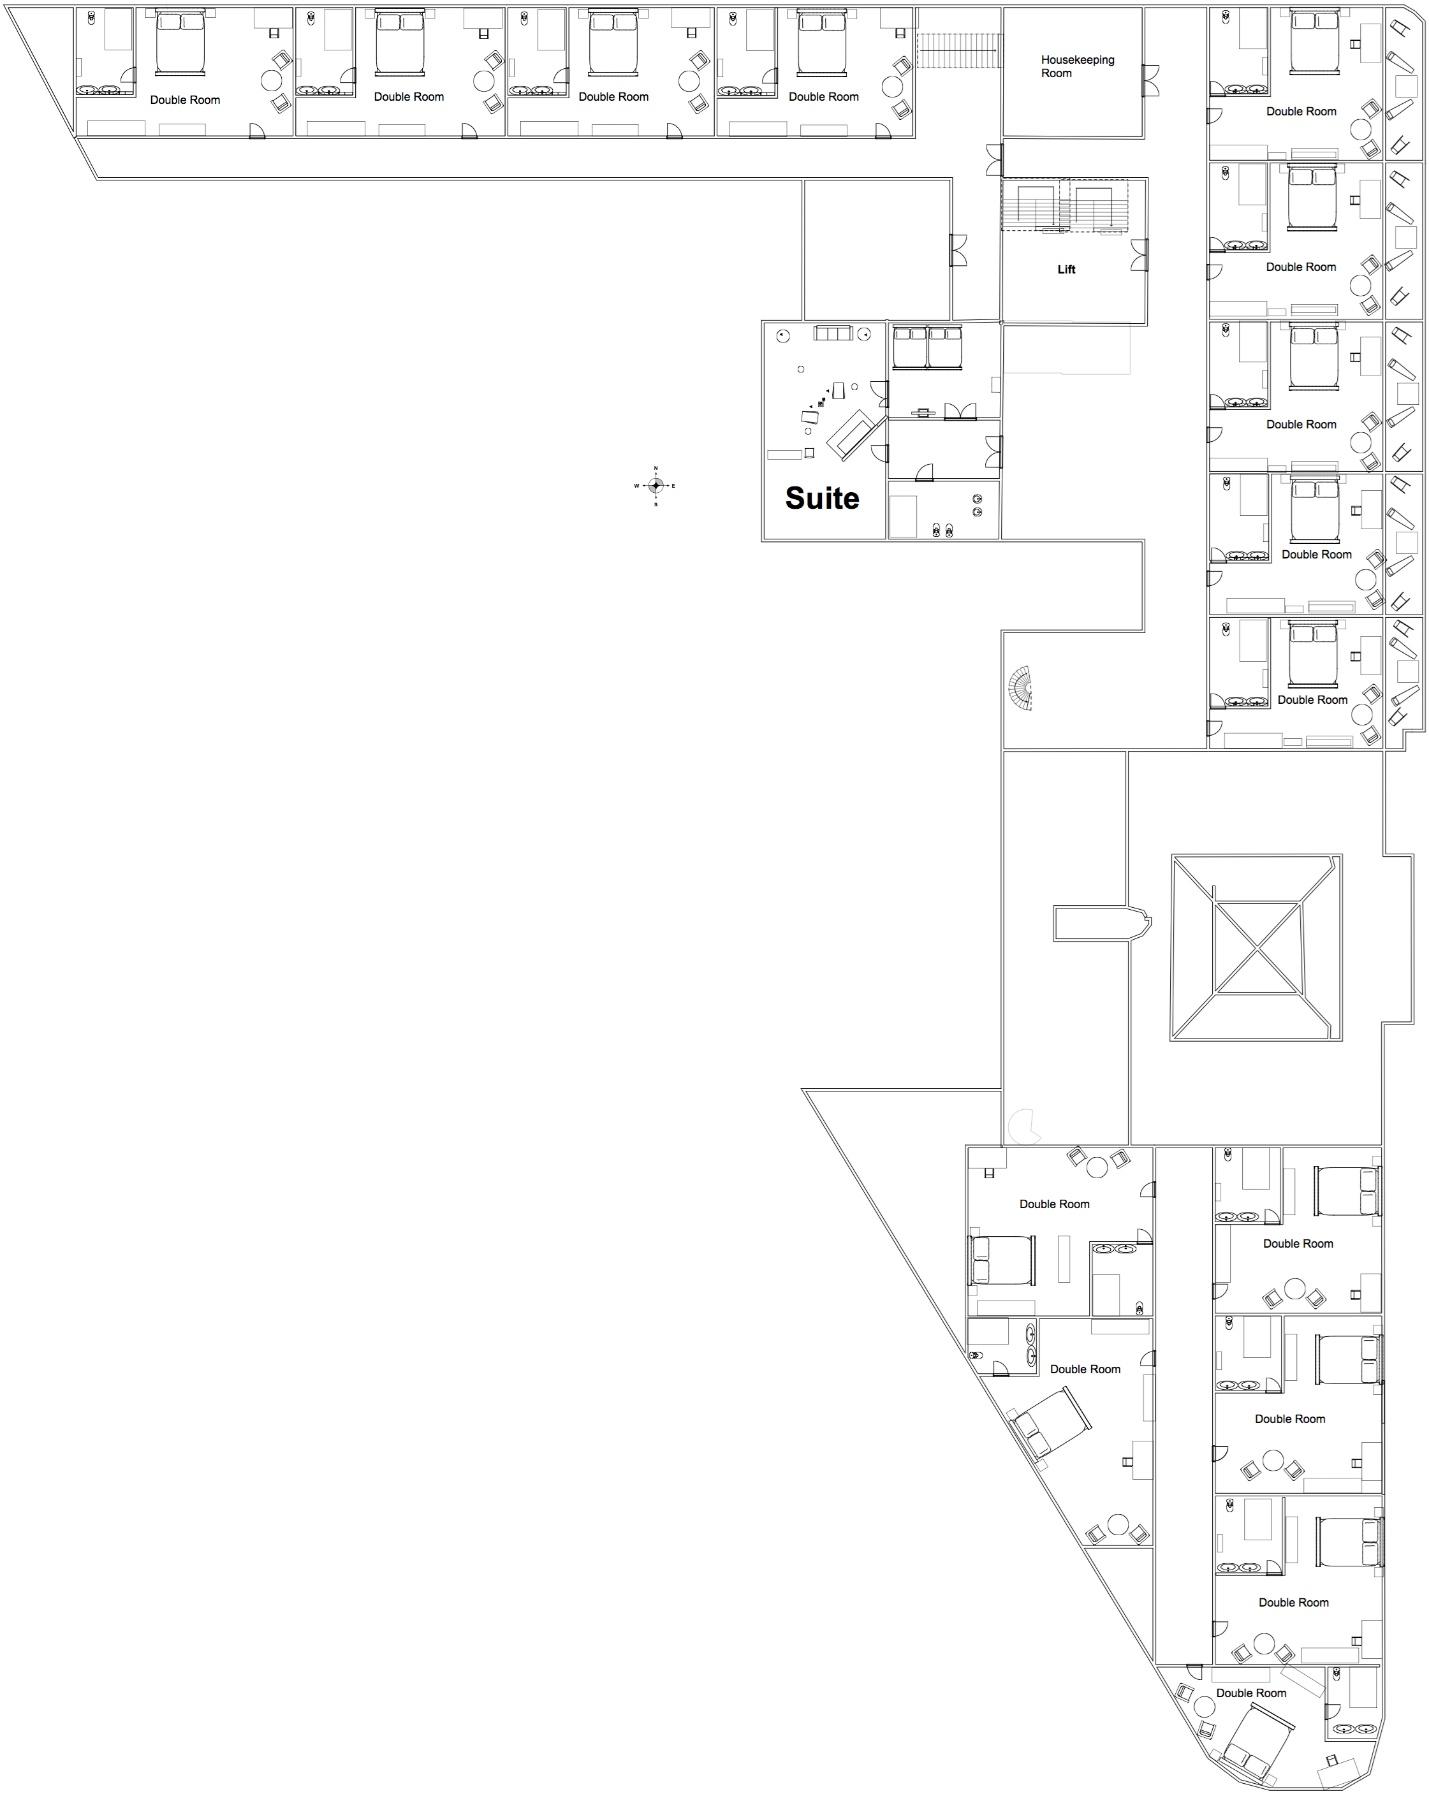 fourth floor layout